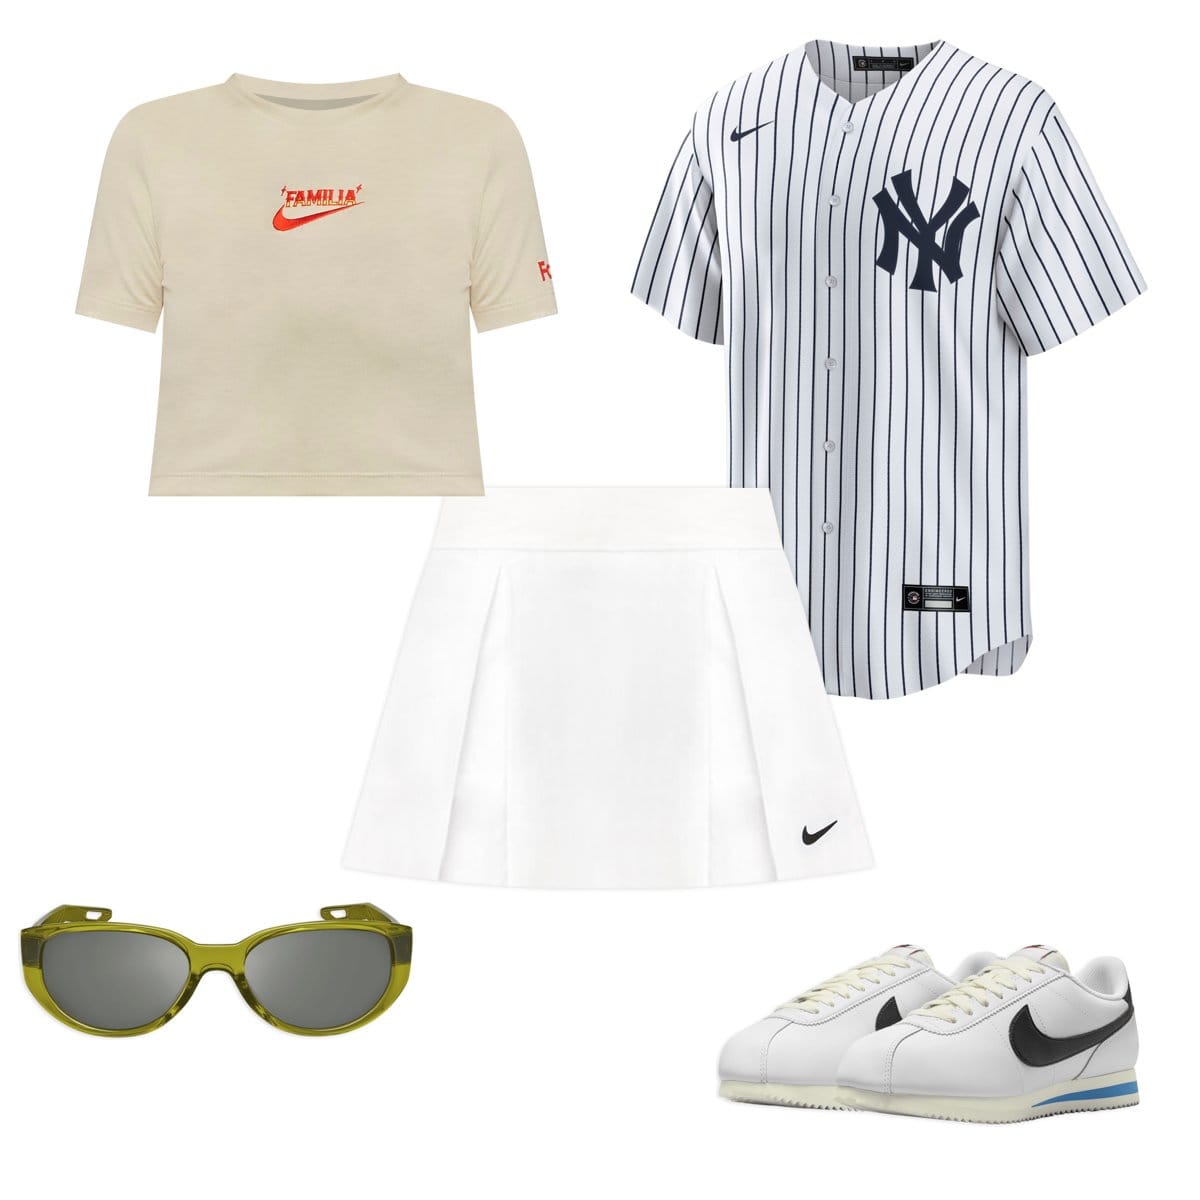 baseball game outfits